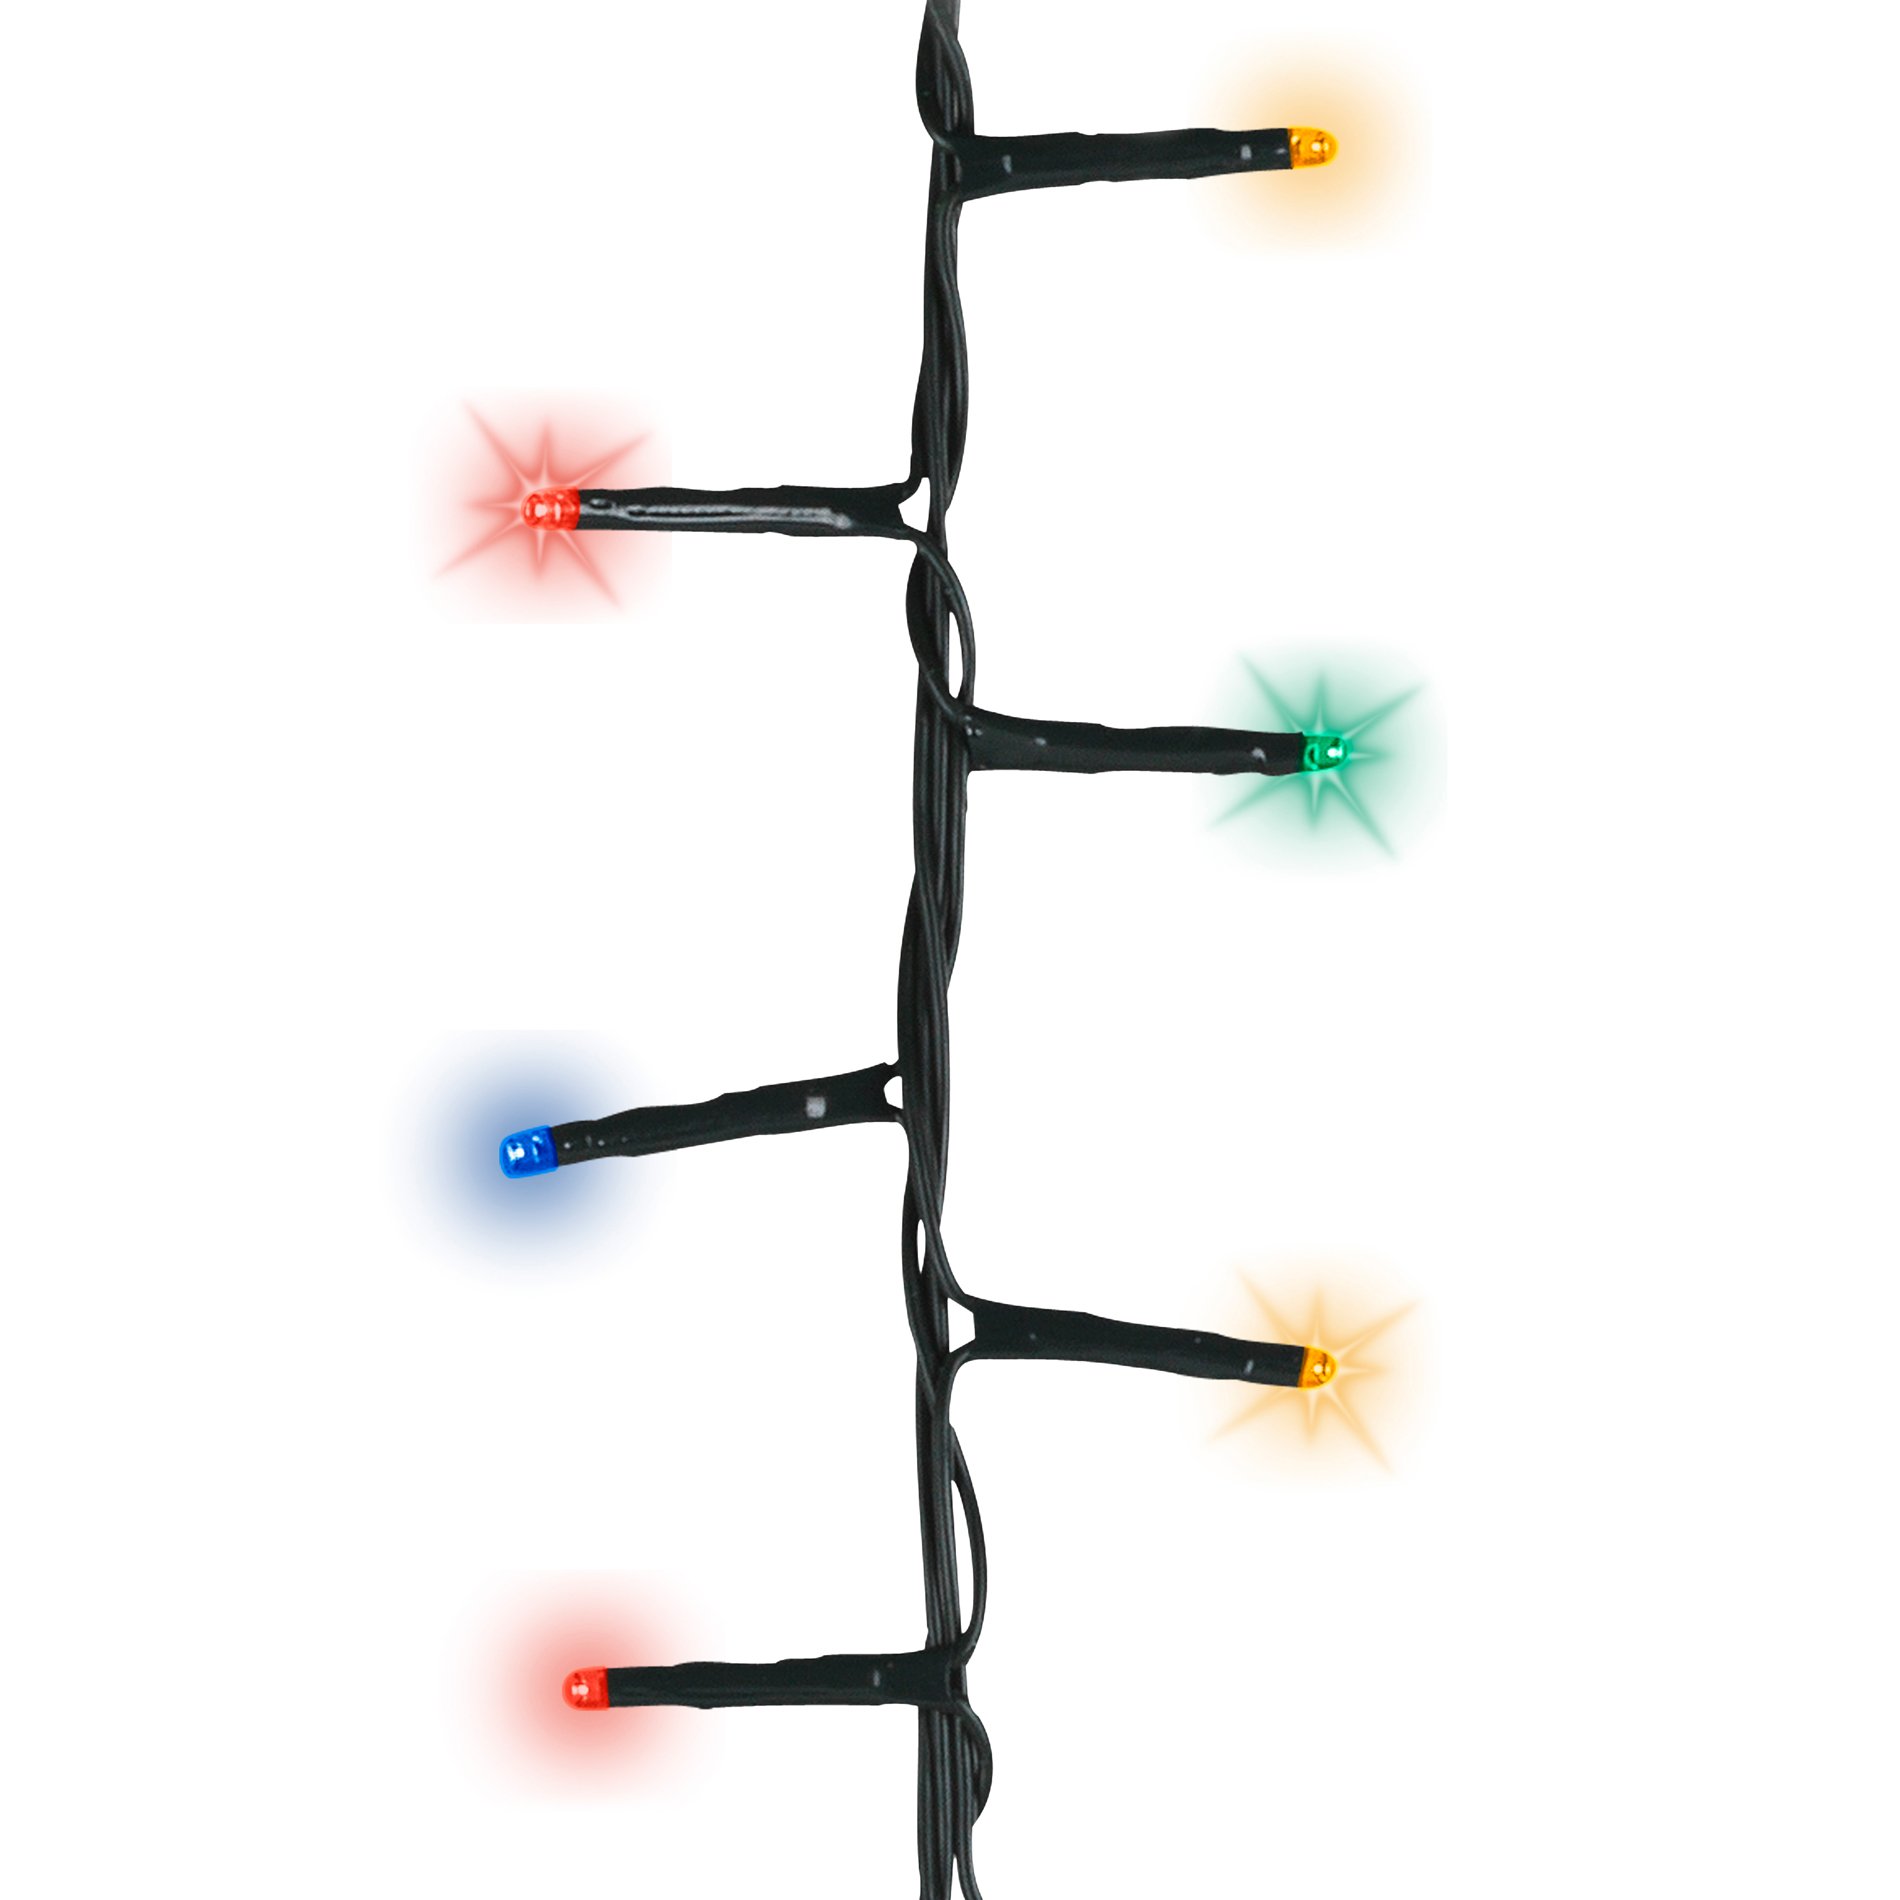 Guirlande lumineuse 230V 'Sapin de Noël' 500 lumières / 11m